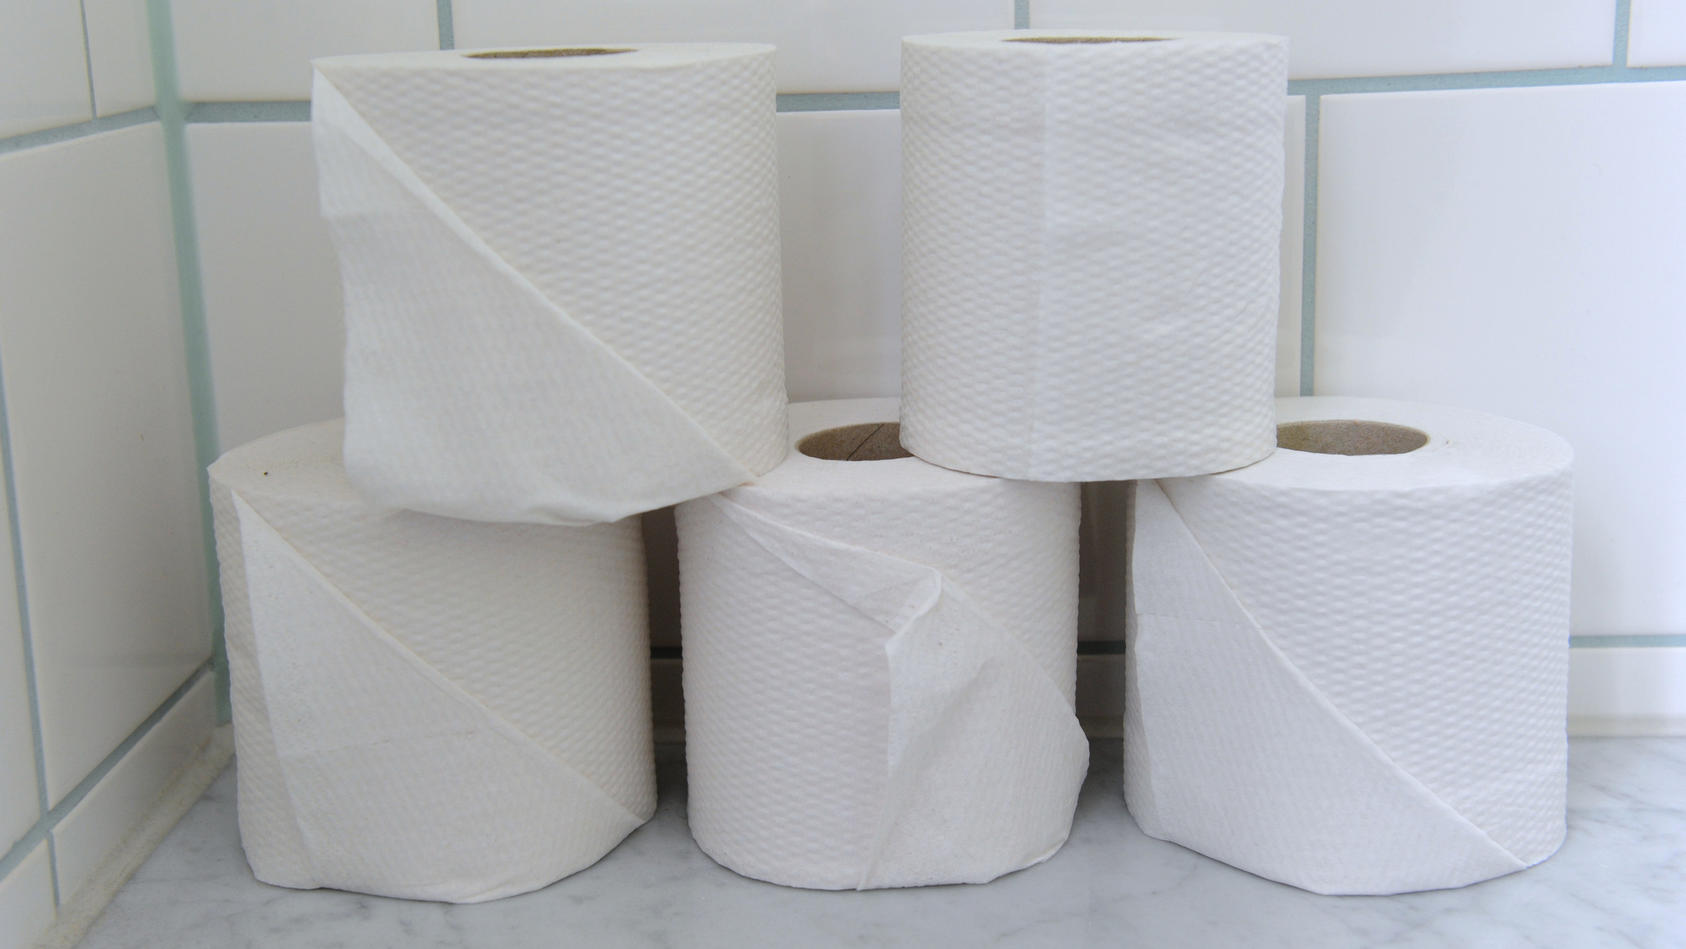 Toilettenpapier war zu Beginn der Corona-Krise ein knappes Gut